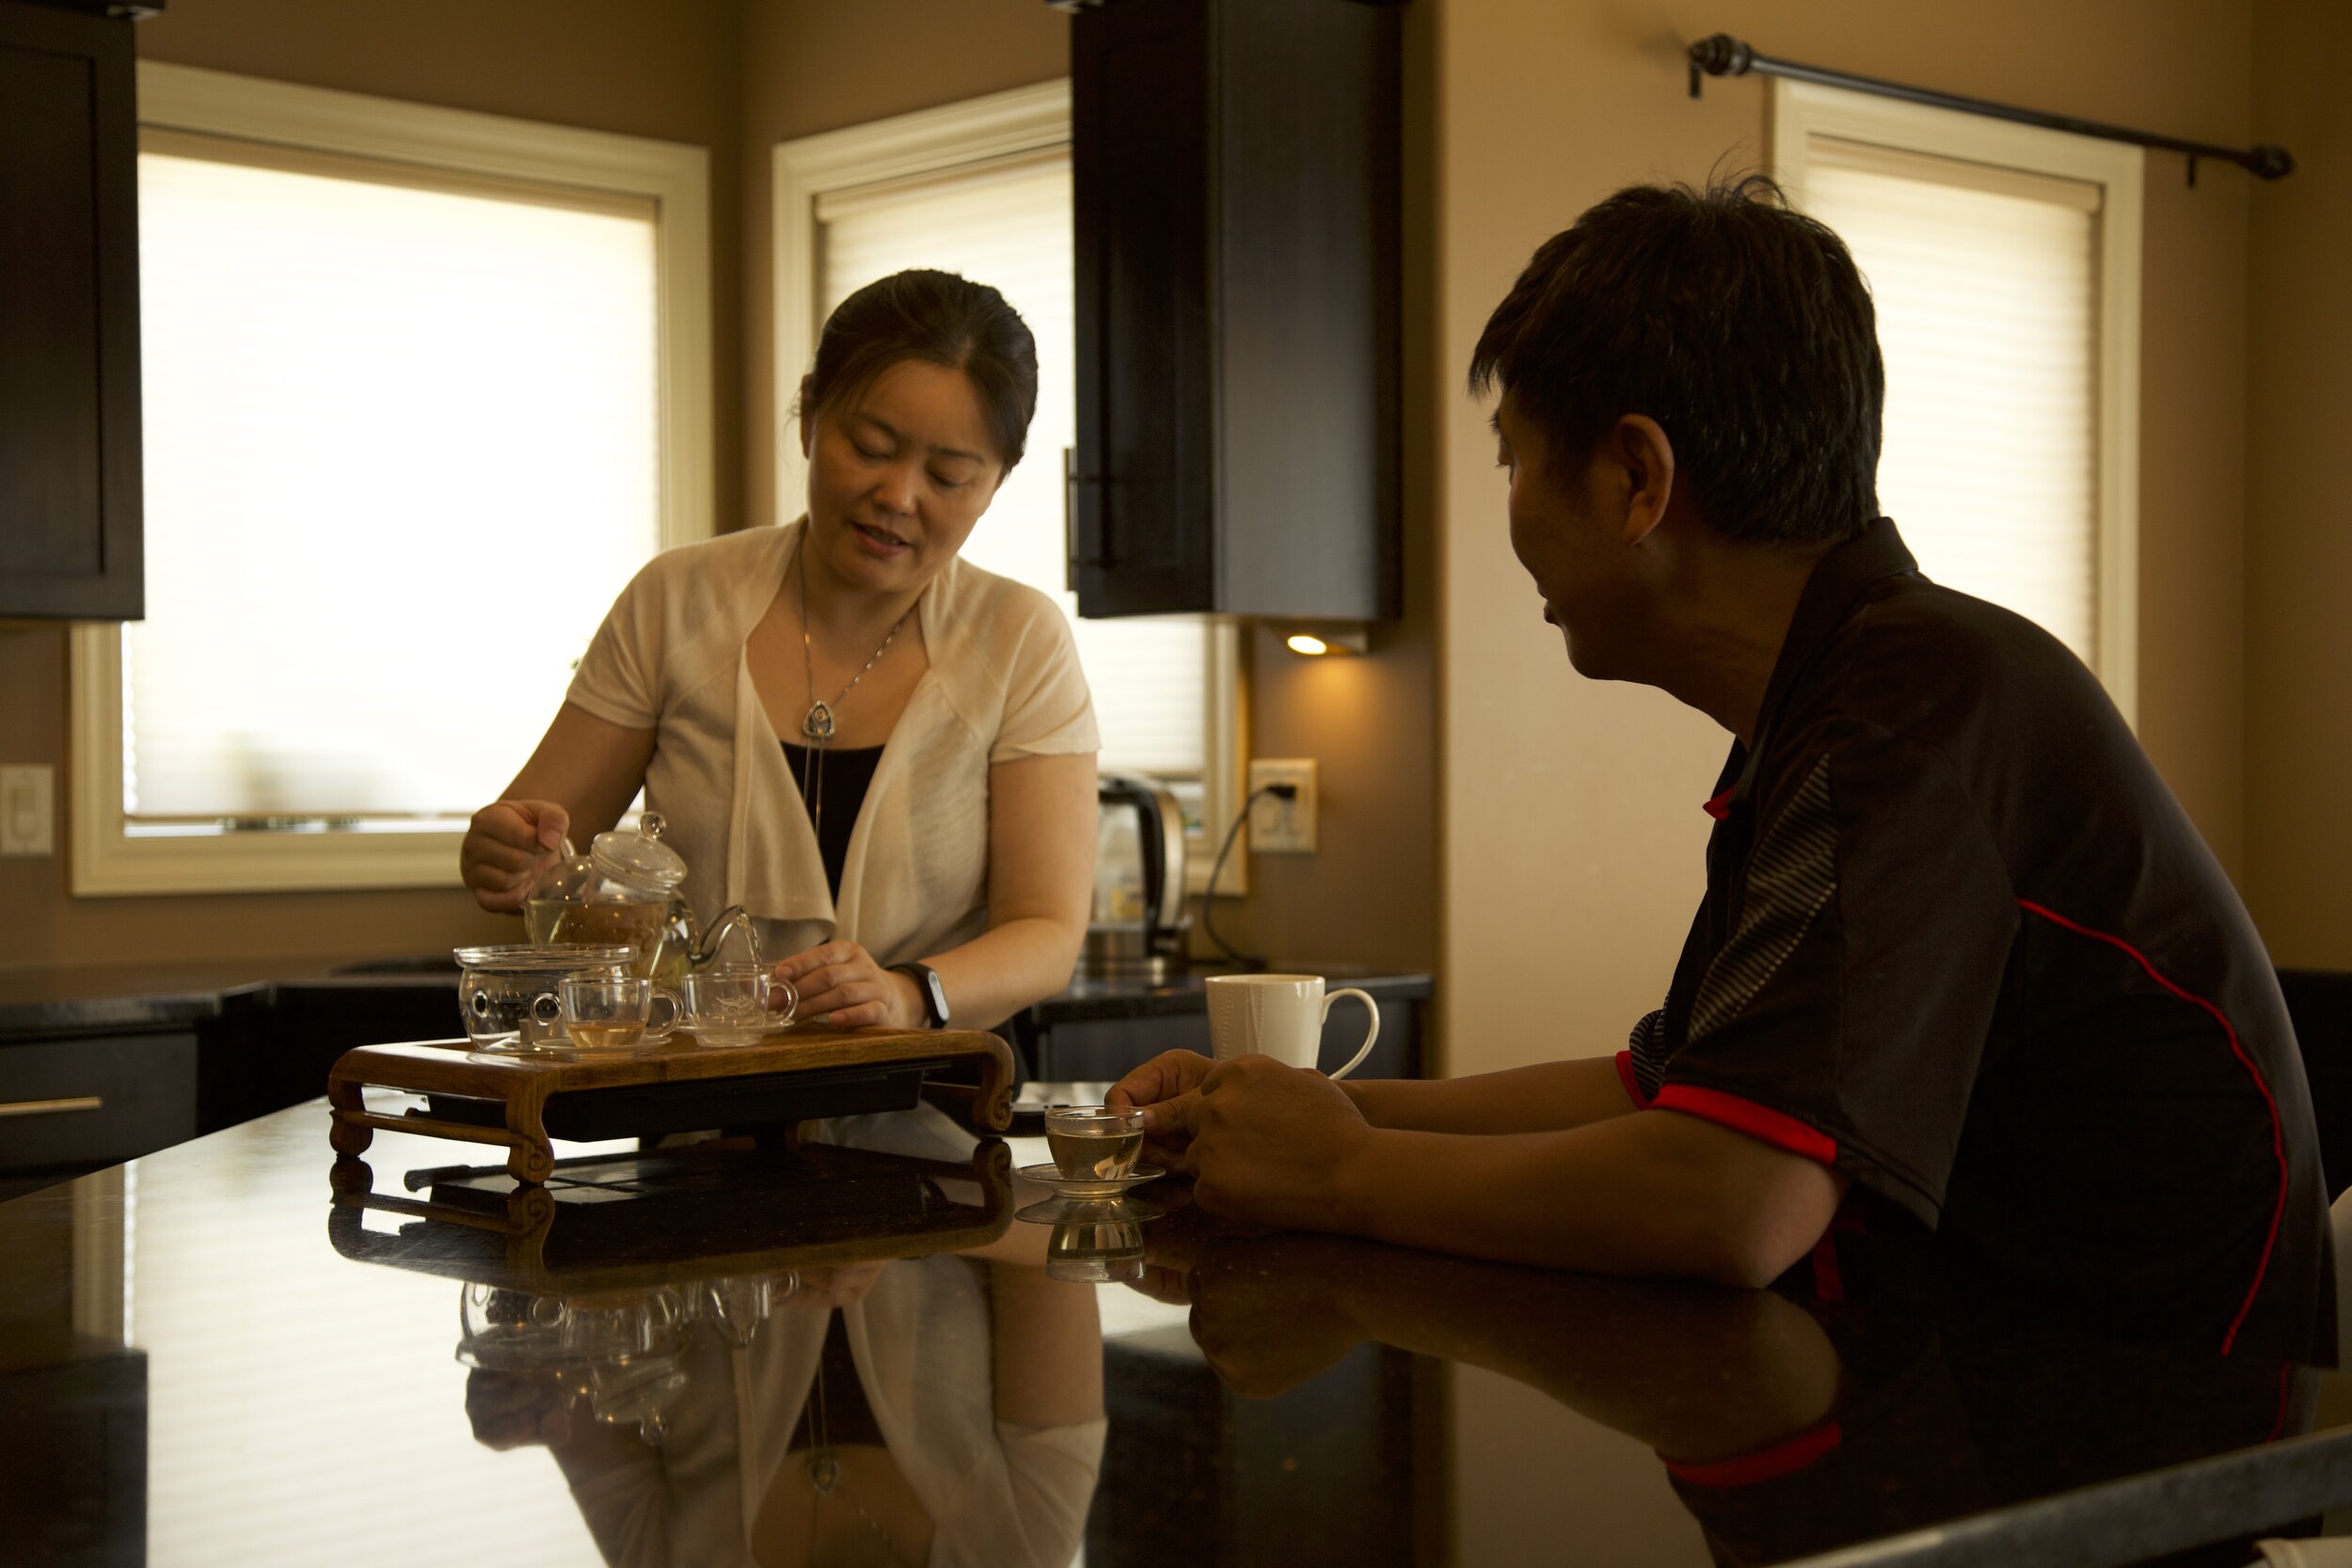 Farmland - David Fu and his wife Lillie Gao discuss farm matters over tea.jpg